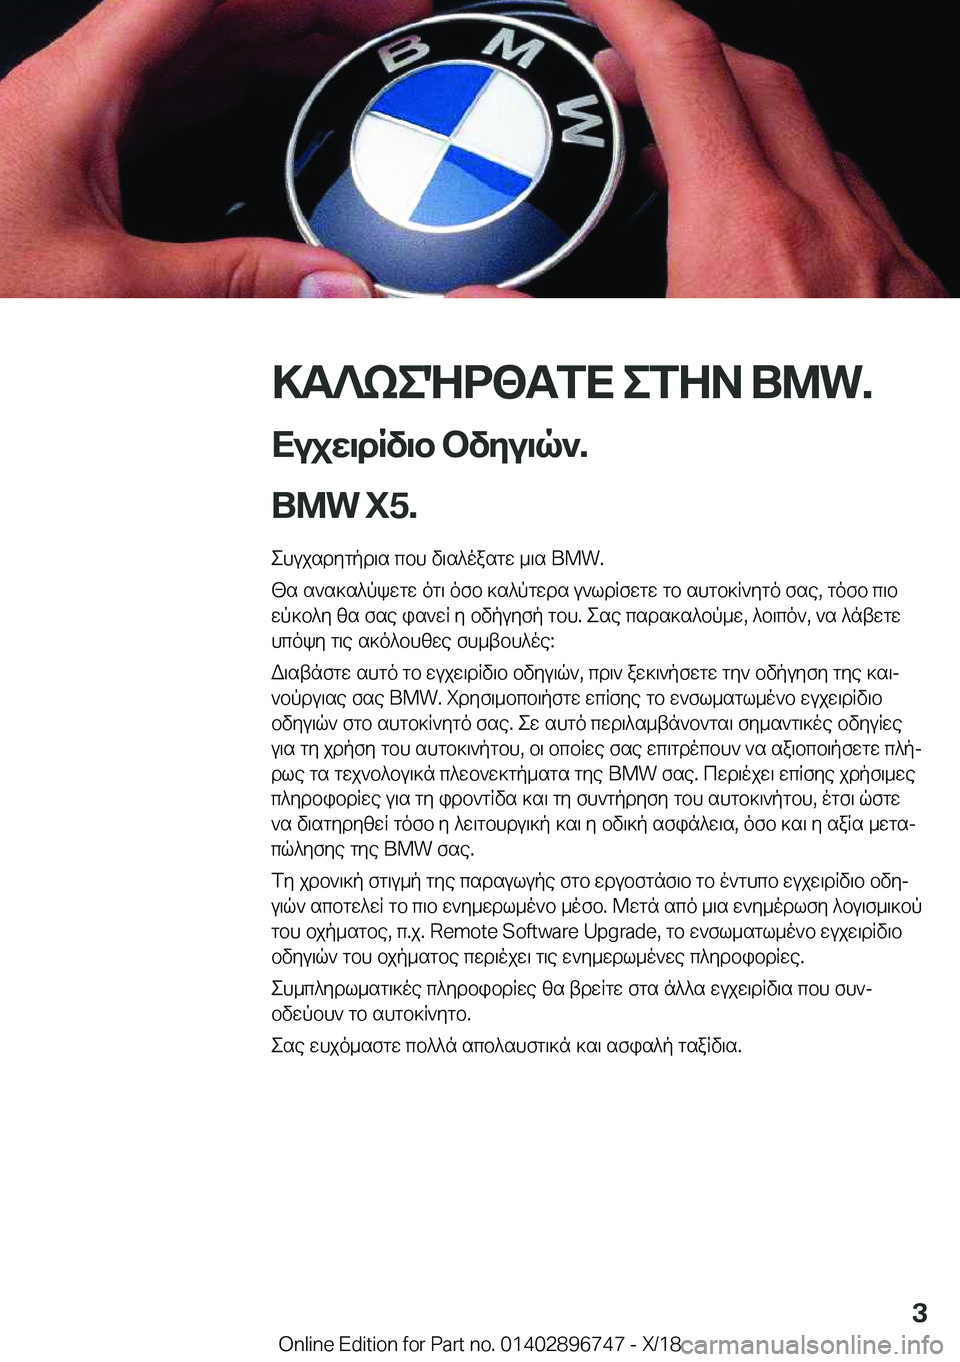 BMW X5 2019  ΟΔΗΓΌΣ ΧΡΉΣΗΣ (in Greek) >T?keNd<TfX�efZA��B�M�W�.
Xujw\dRv\b�bvyu\q`�.
�B�M�W��X�5�. ehujsdygpd\s�cbh�v\s^oasgw�_\s��B�M�W�.
[s�s`s]s^pkwgw�o